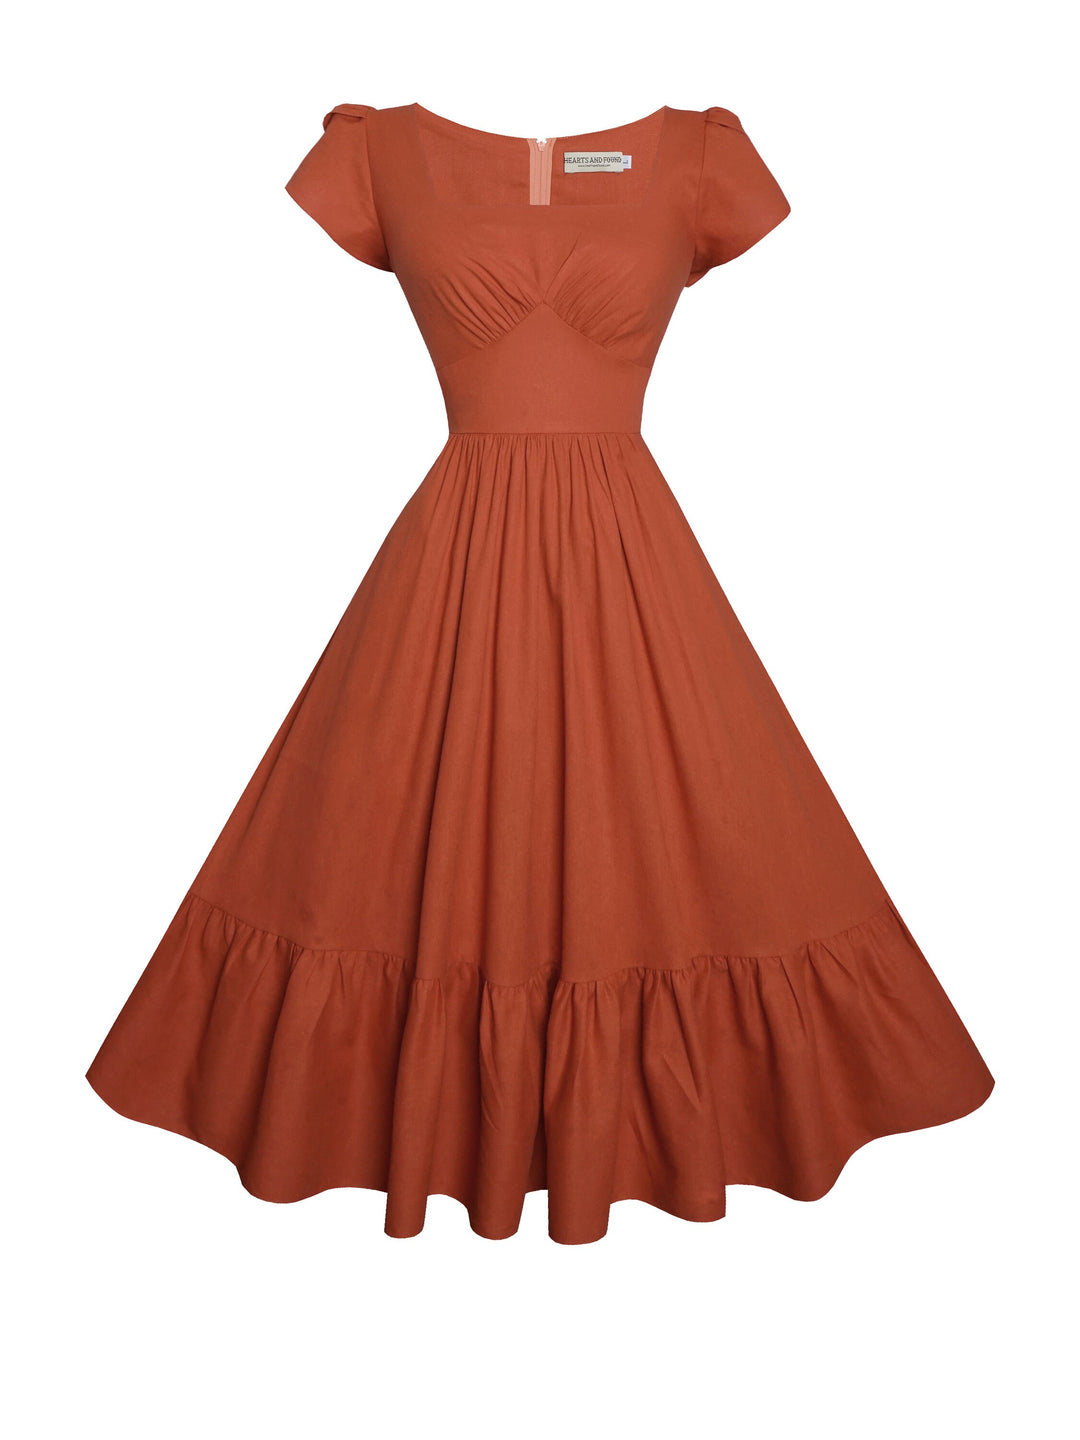 MTO - Ava Dress in Redwood Linen